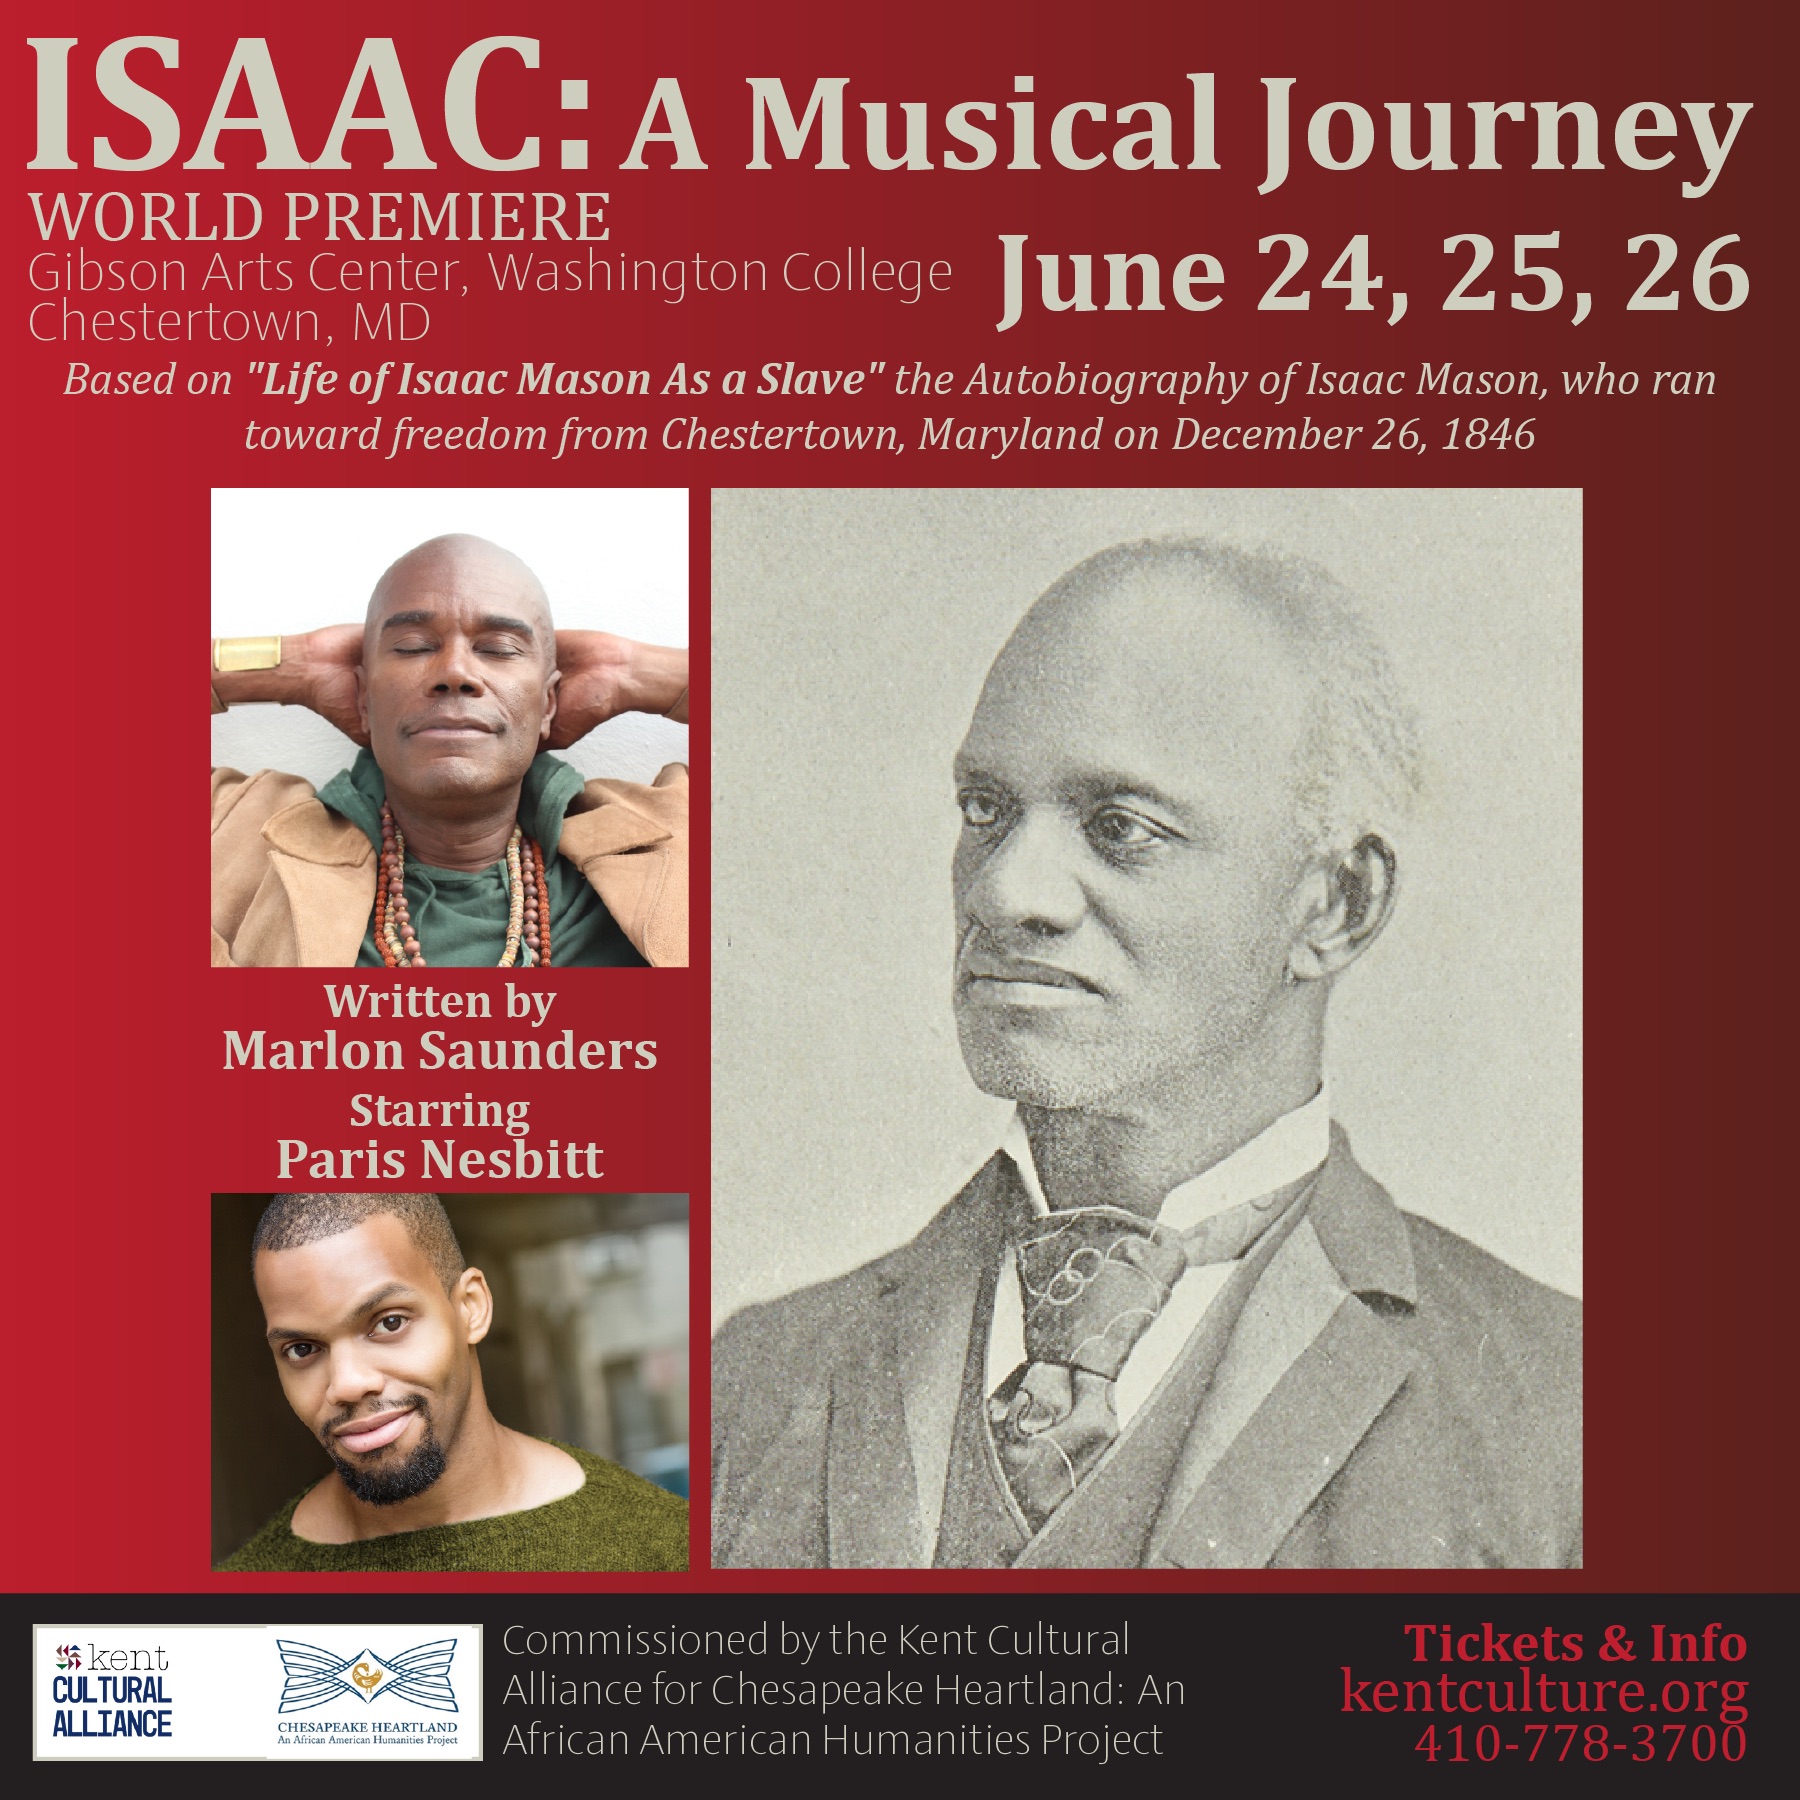 ISAAC: A Musical Journey